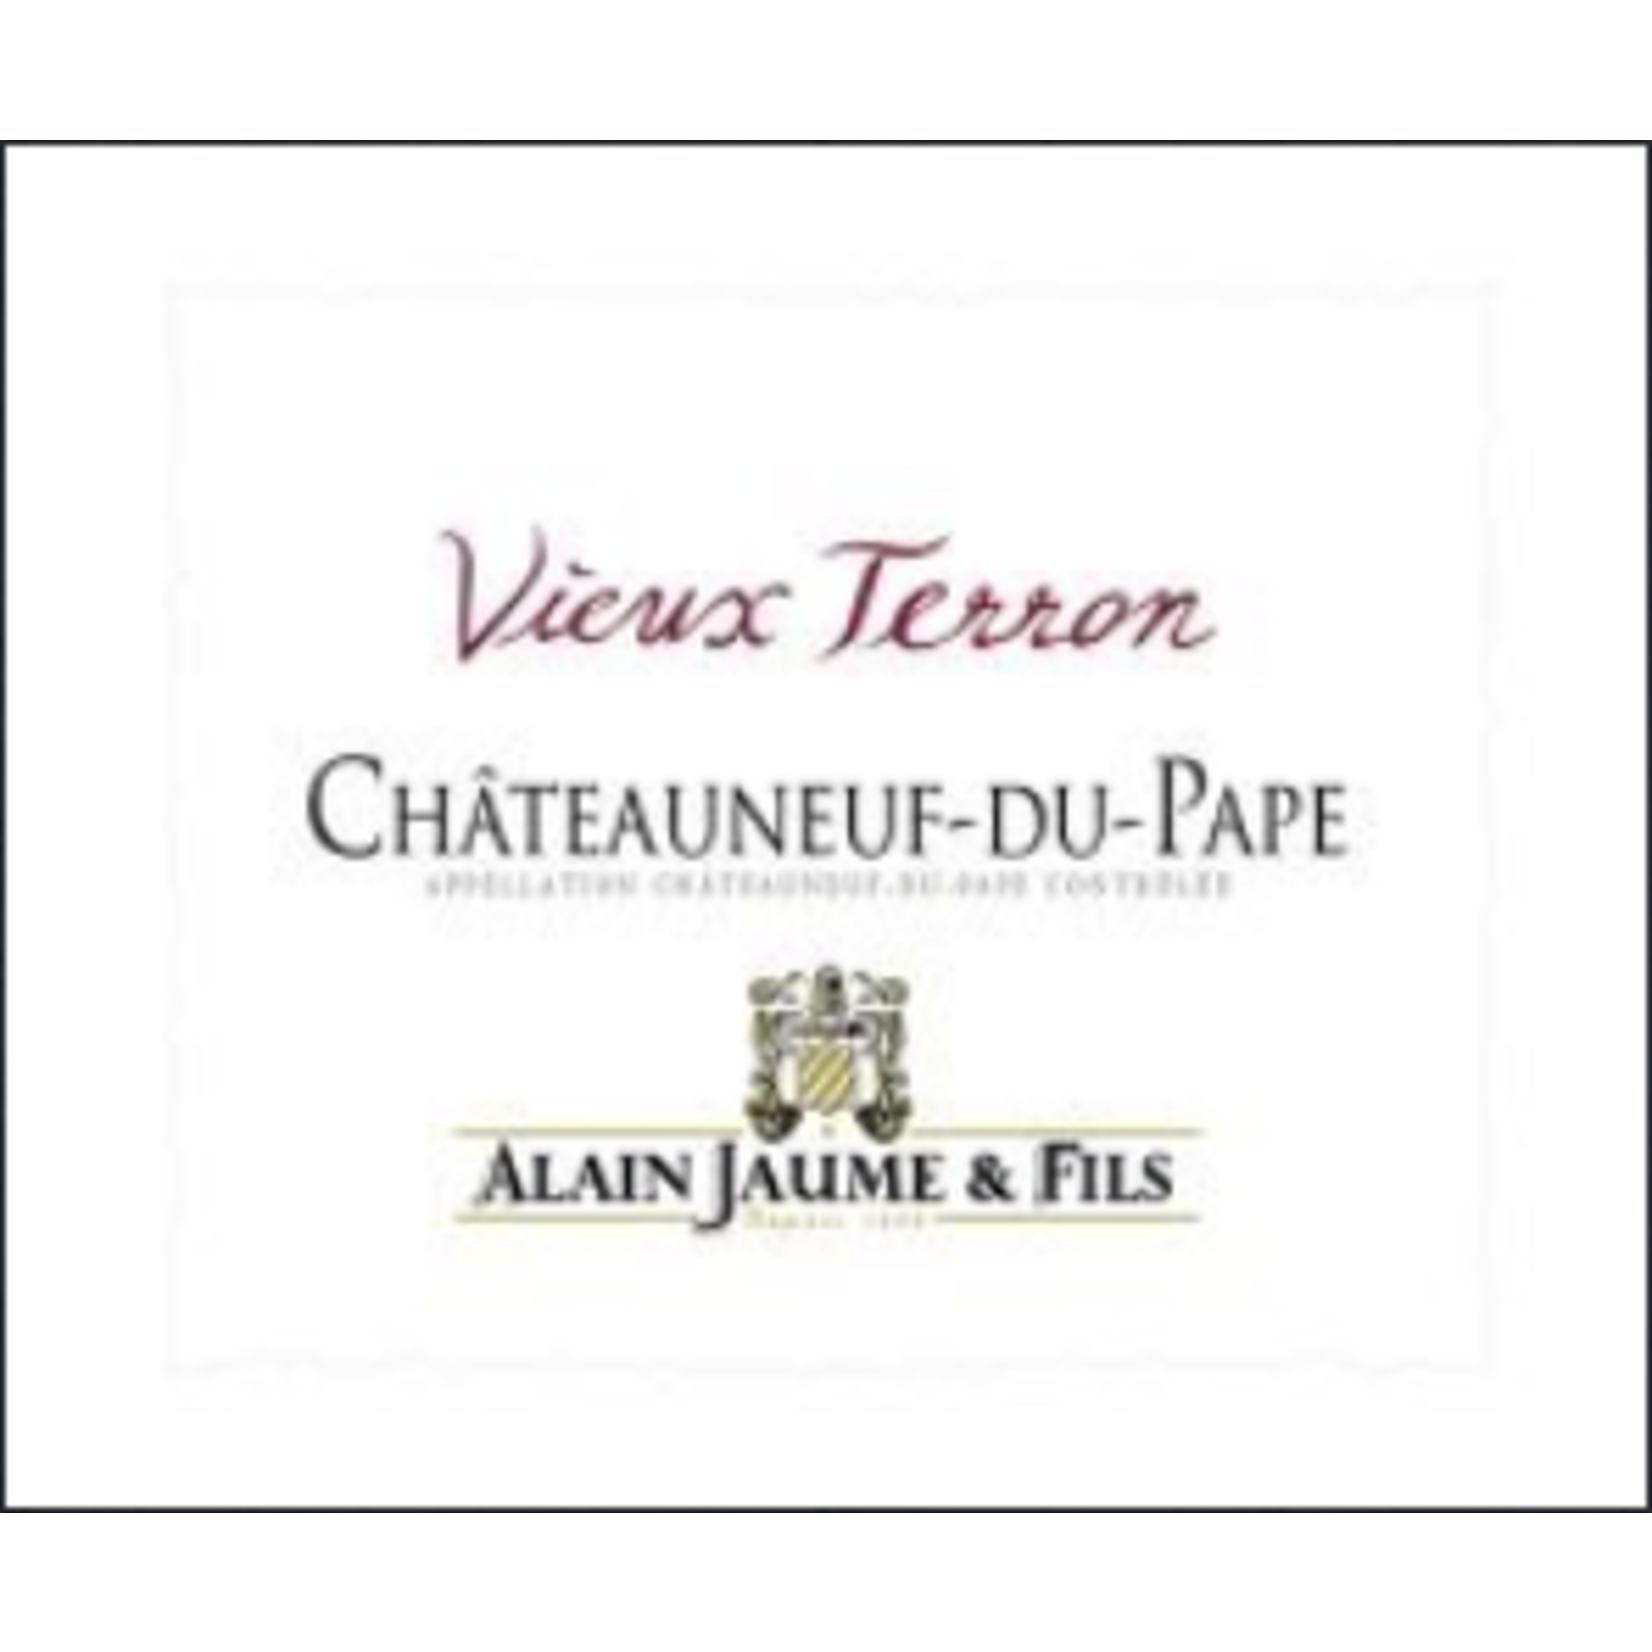 Alain Jaume Alain Jaume Chateauneuf-du-Pape Vieux Terron 2019 Rhone, France